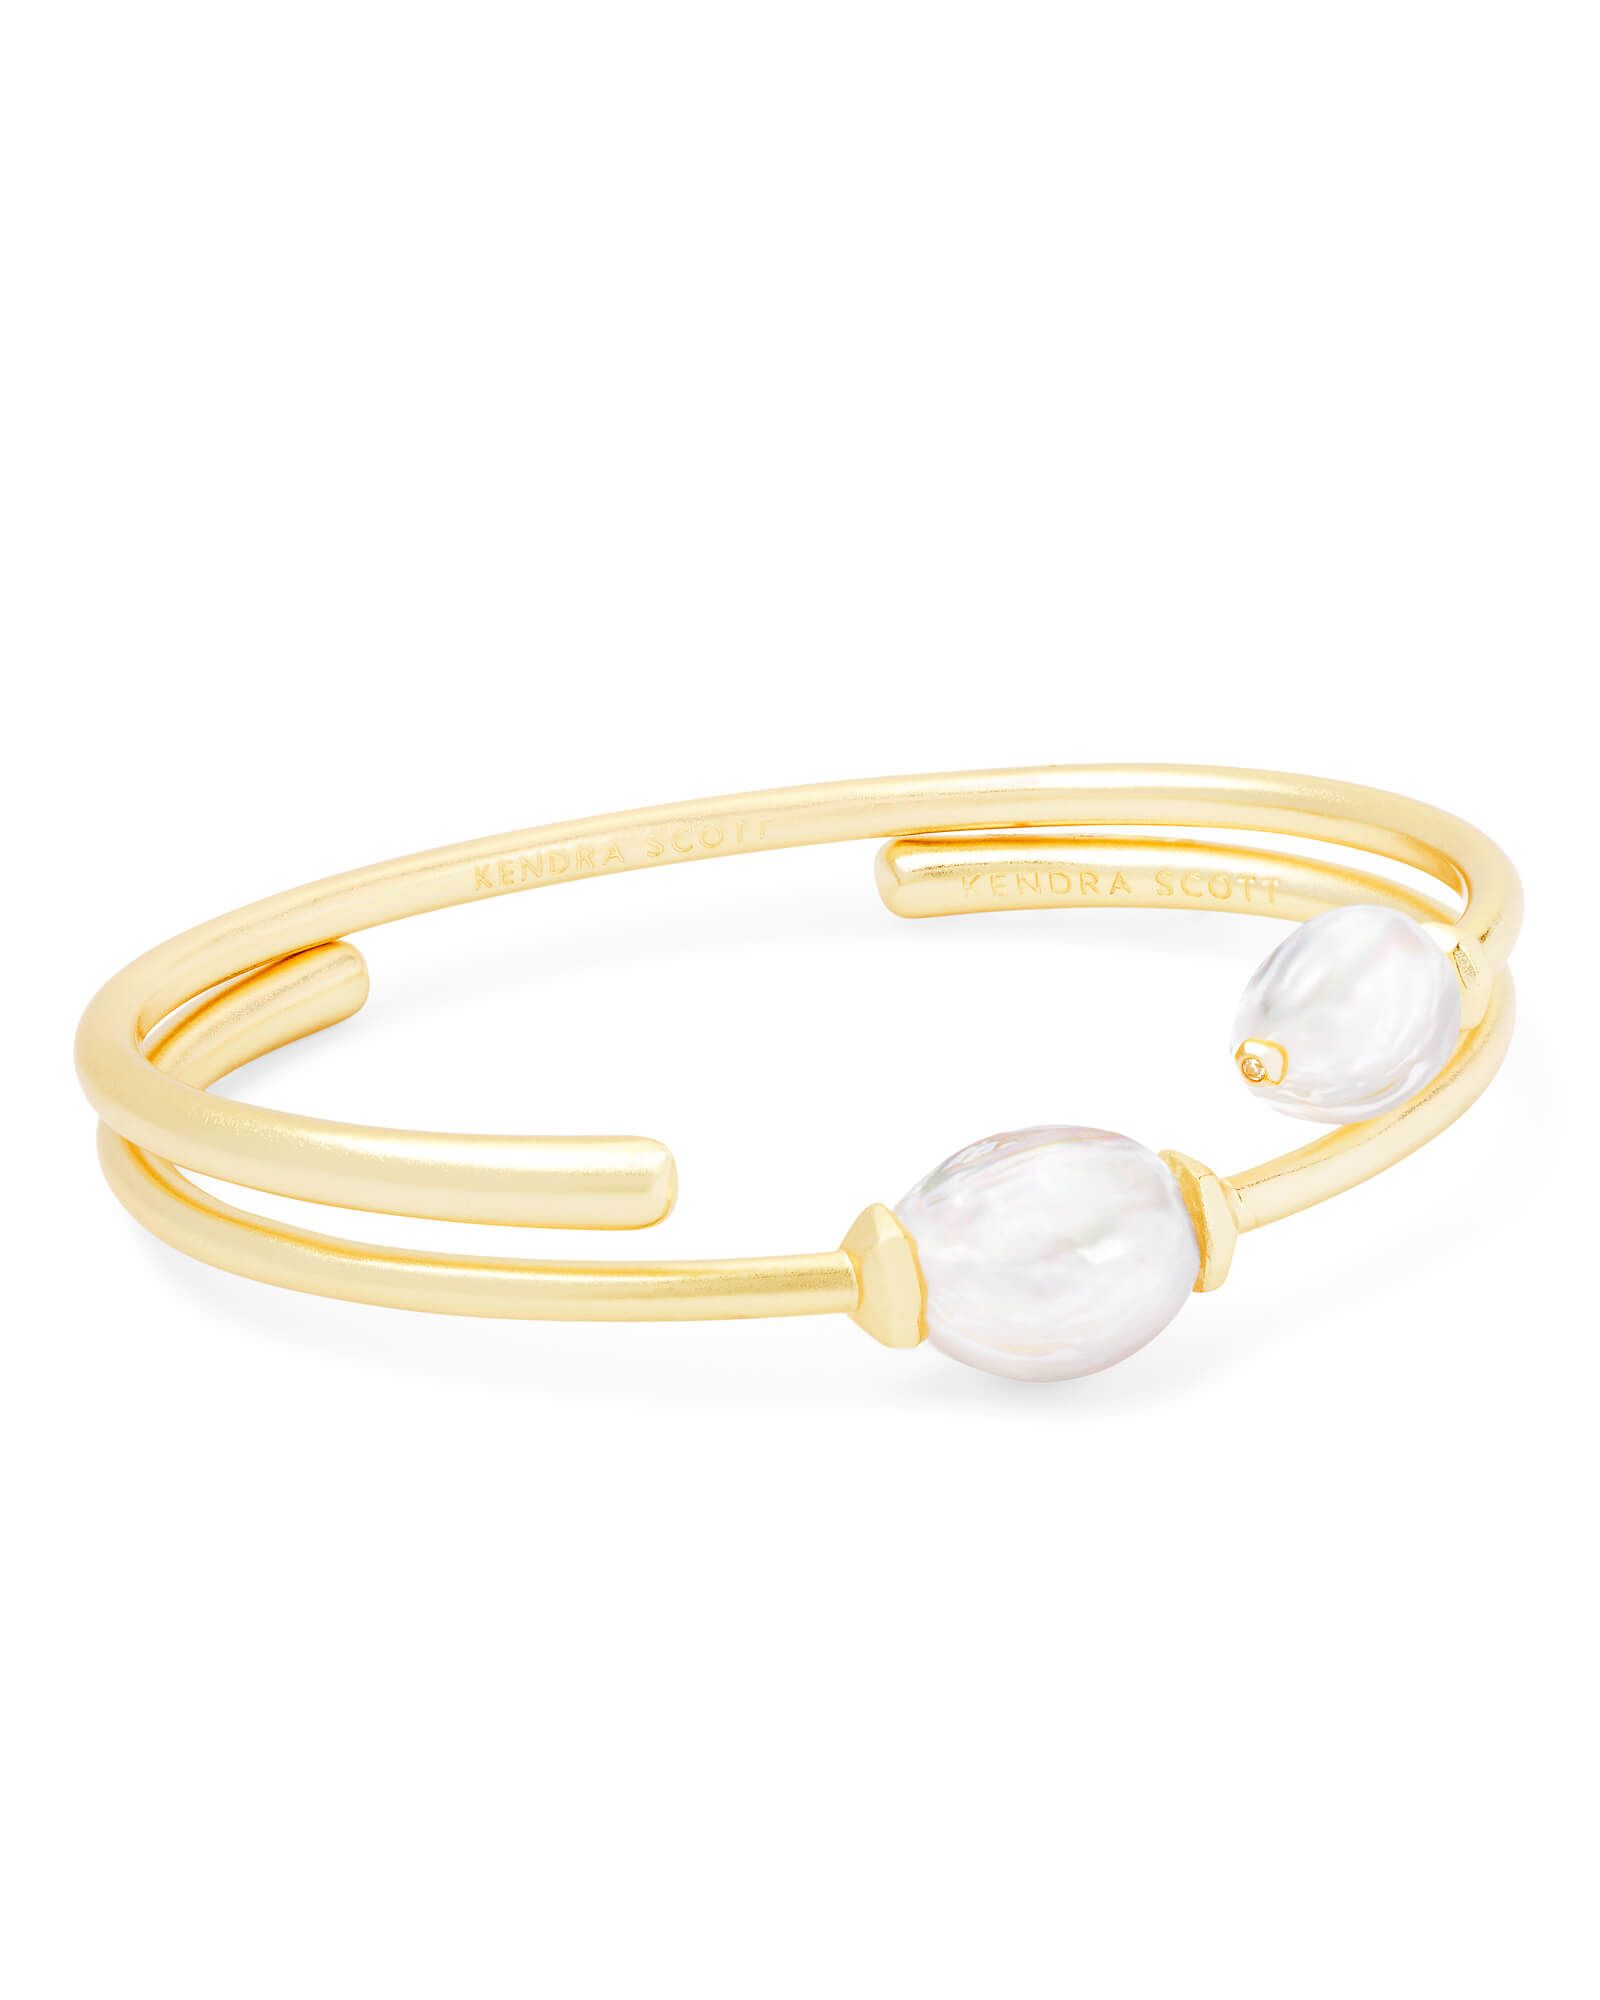 Amiya Gold Cuff Bracelet in Pearl | Kendra Scott